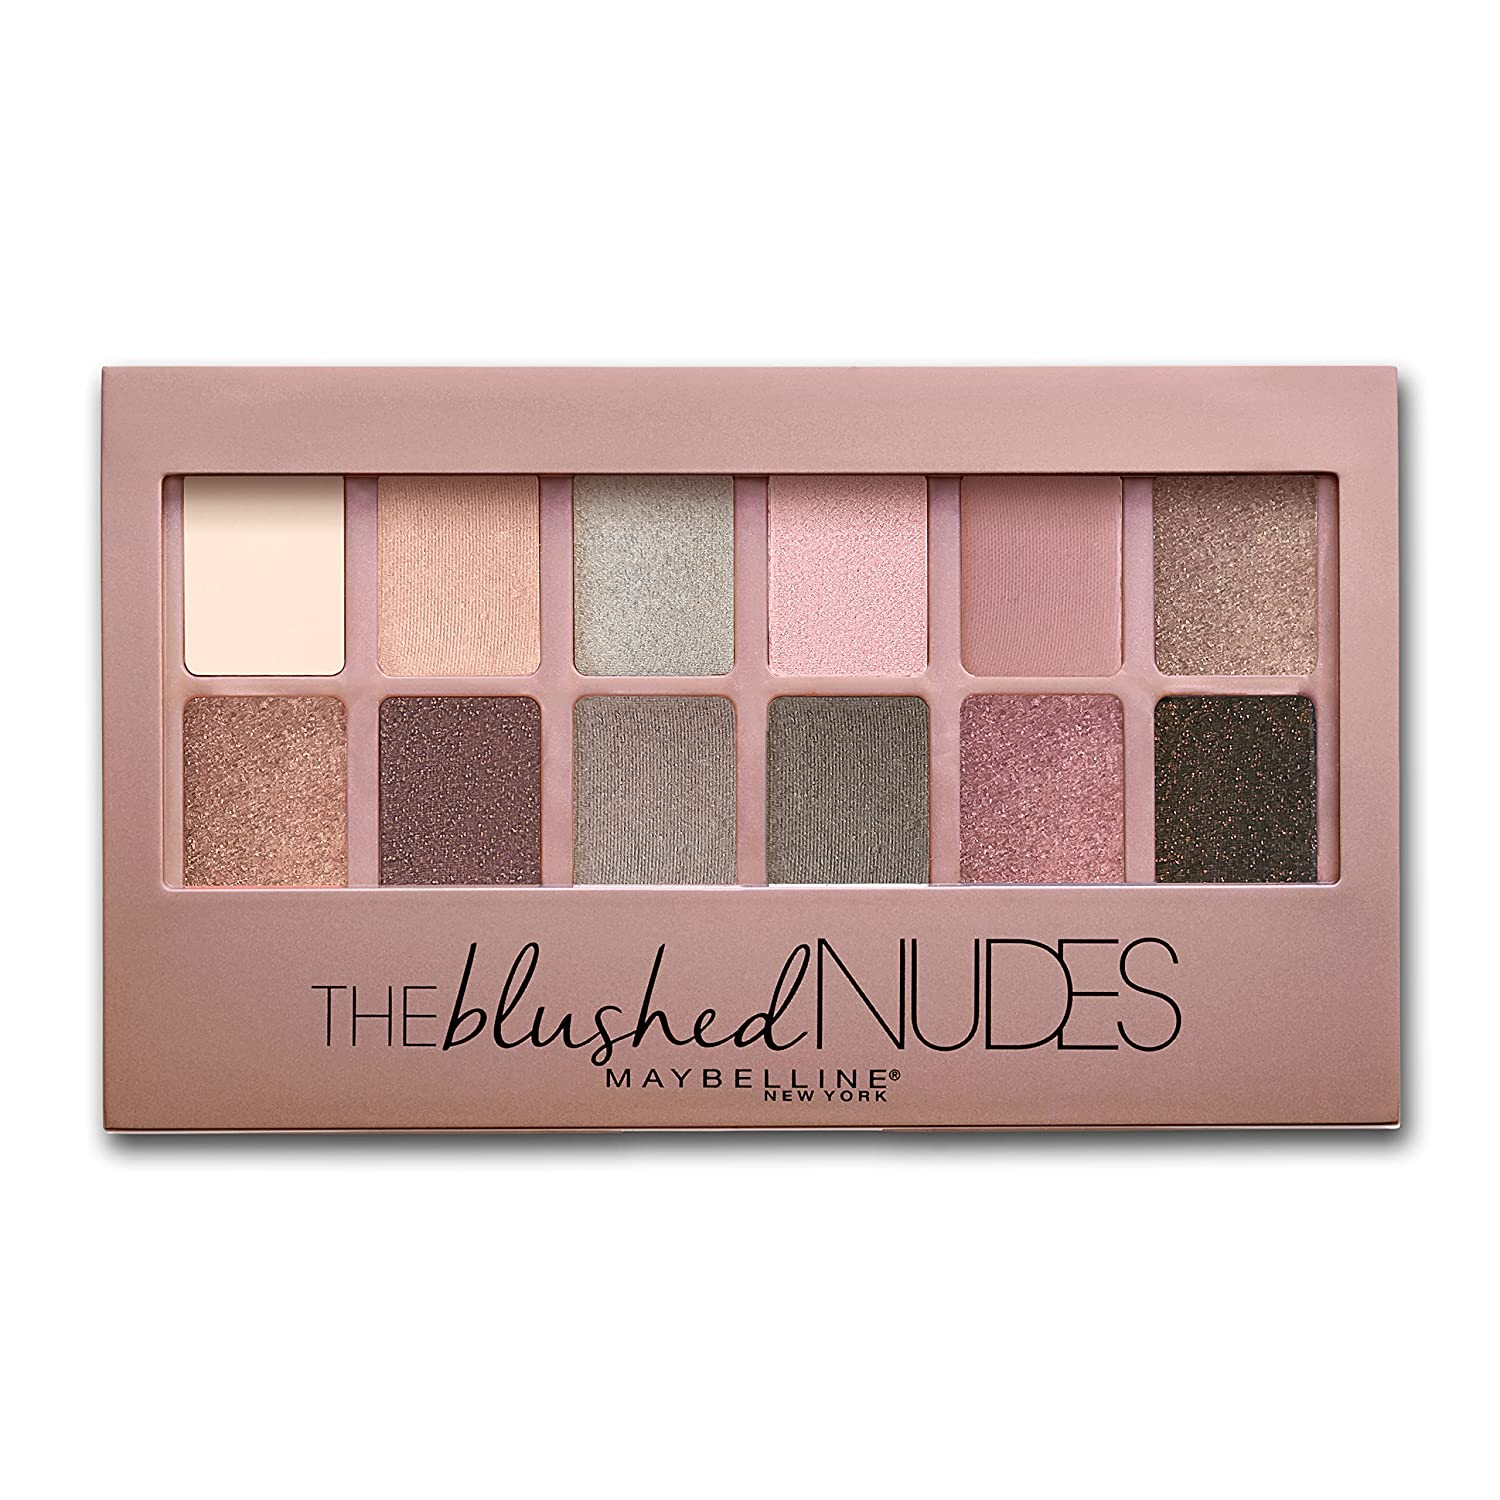 Maybelline New York Applicators & Blushed Nudes Palette Eyeshadow